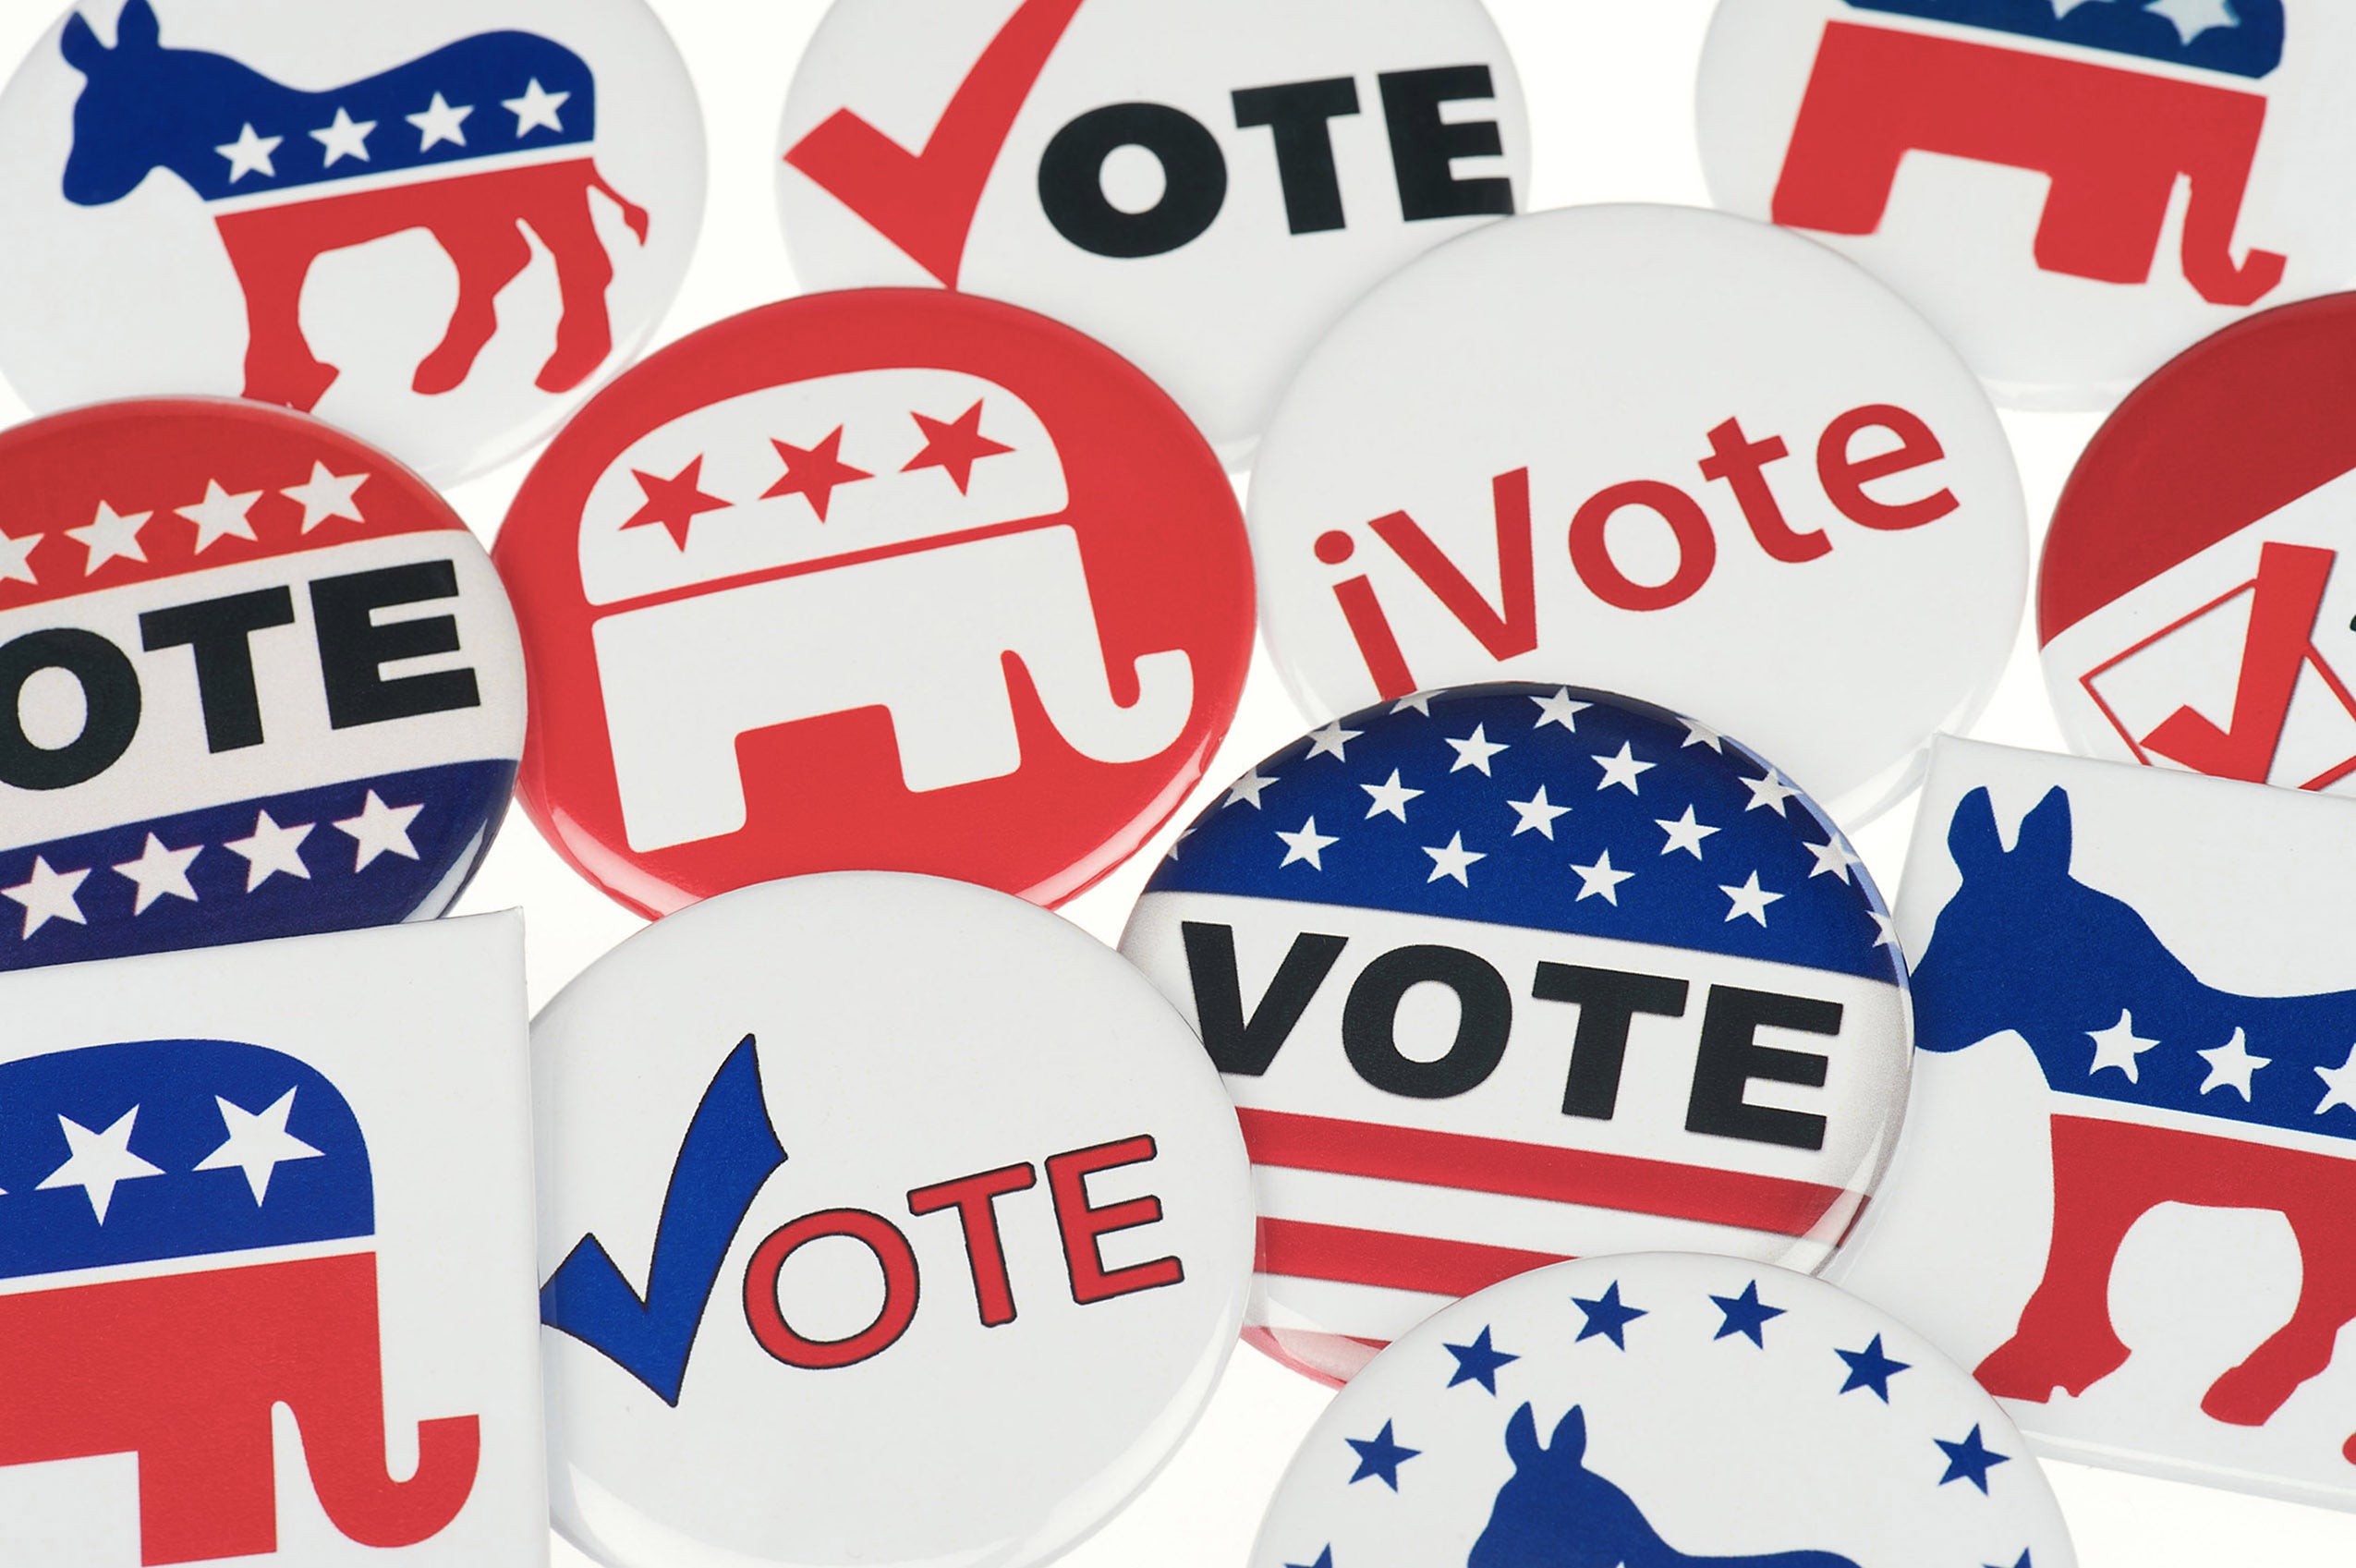 Democrat and Republican vote buttons